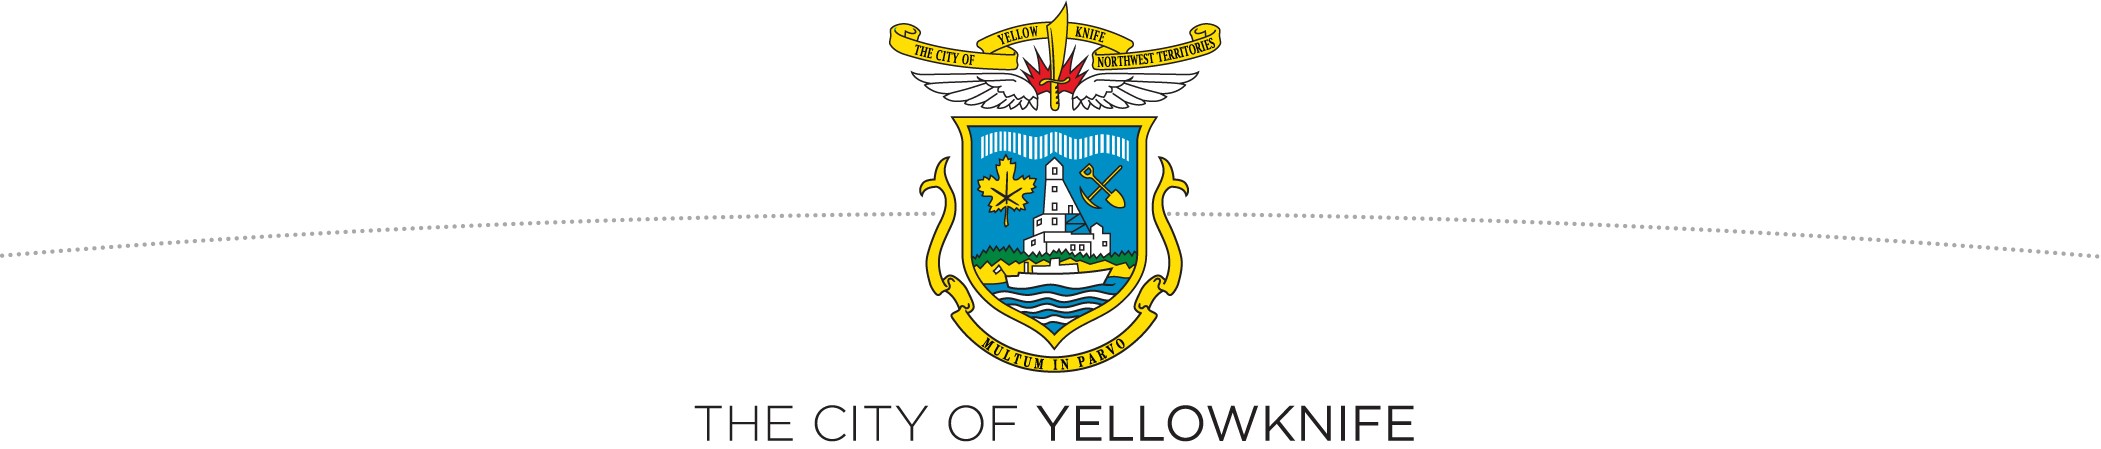 Yellowknife, City of